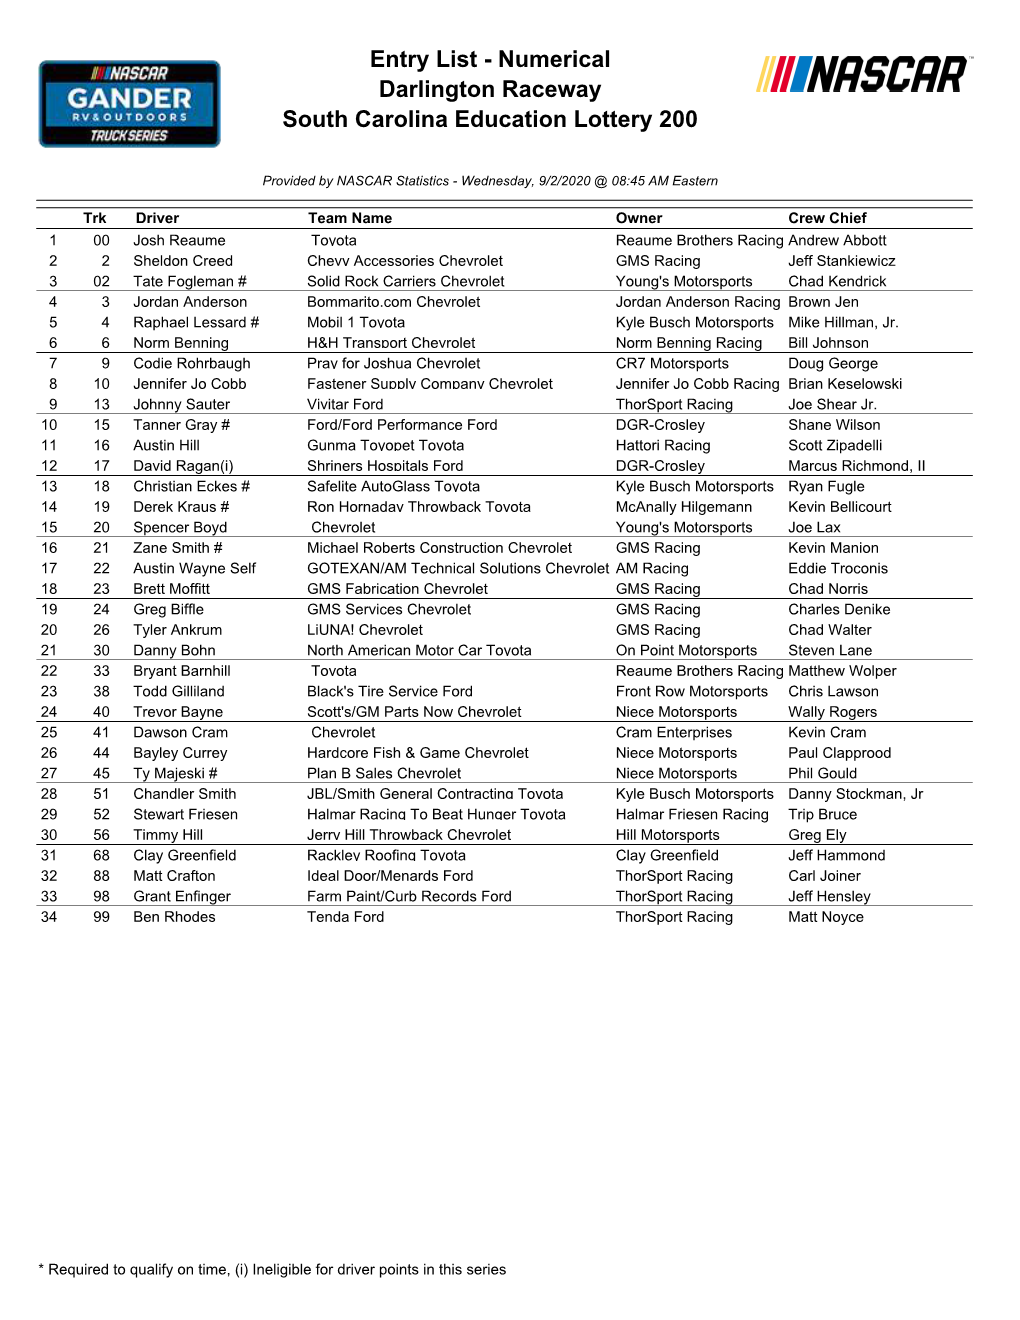 Entry List - Numerical Darlington Raceway South Carolina Education Lottery 200